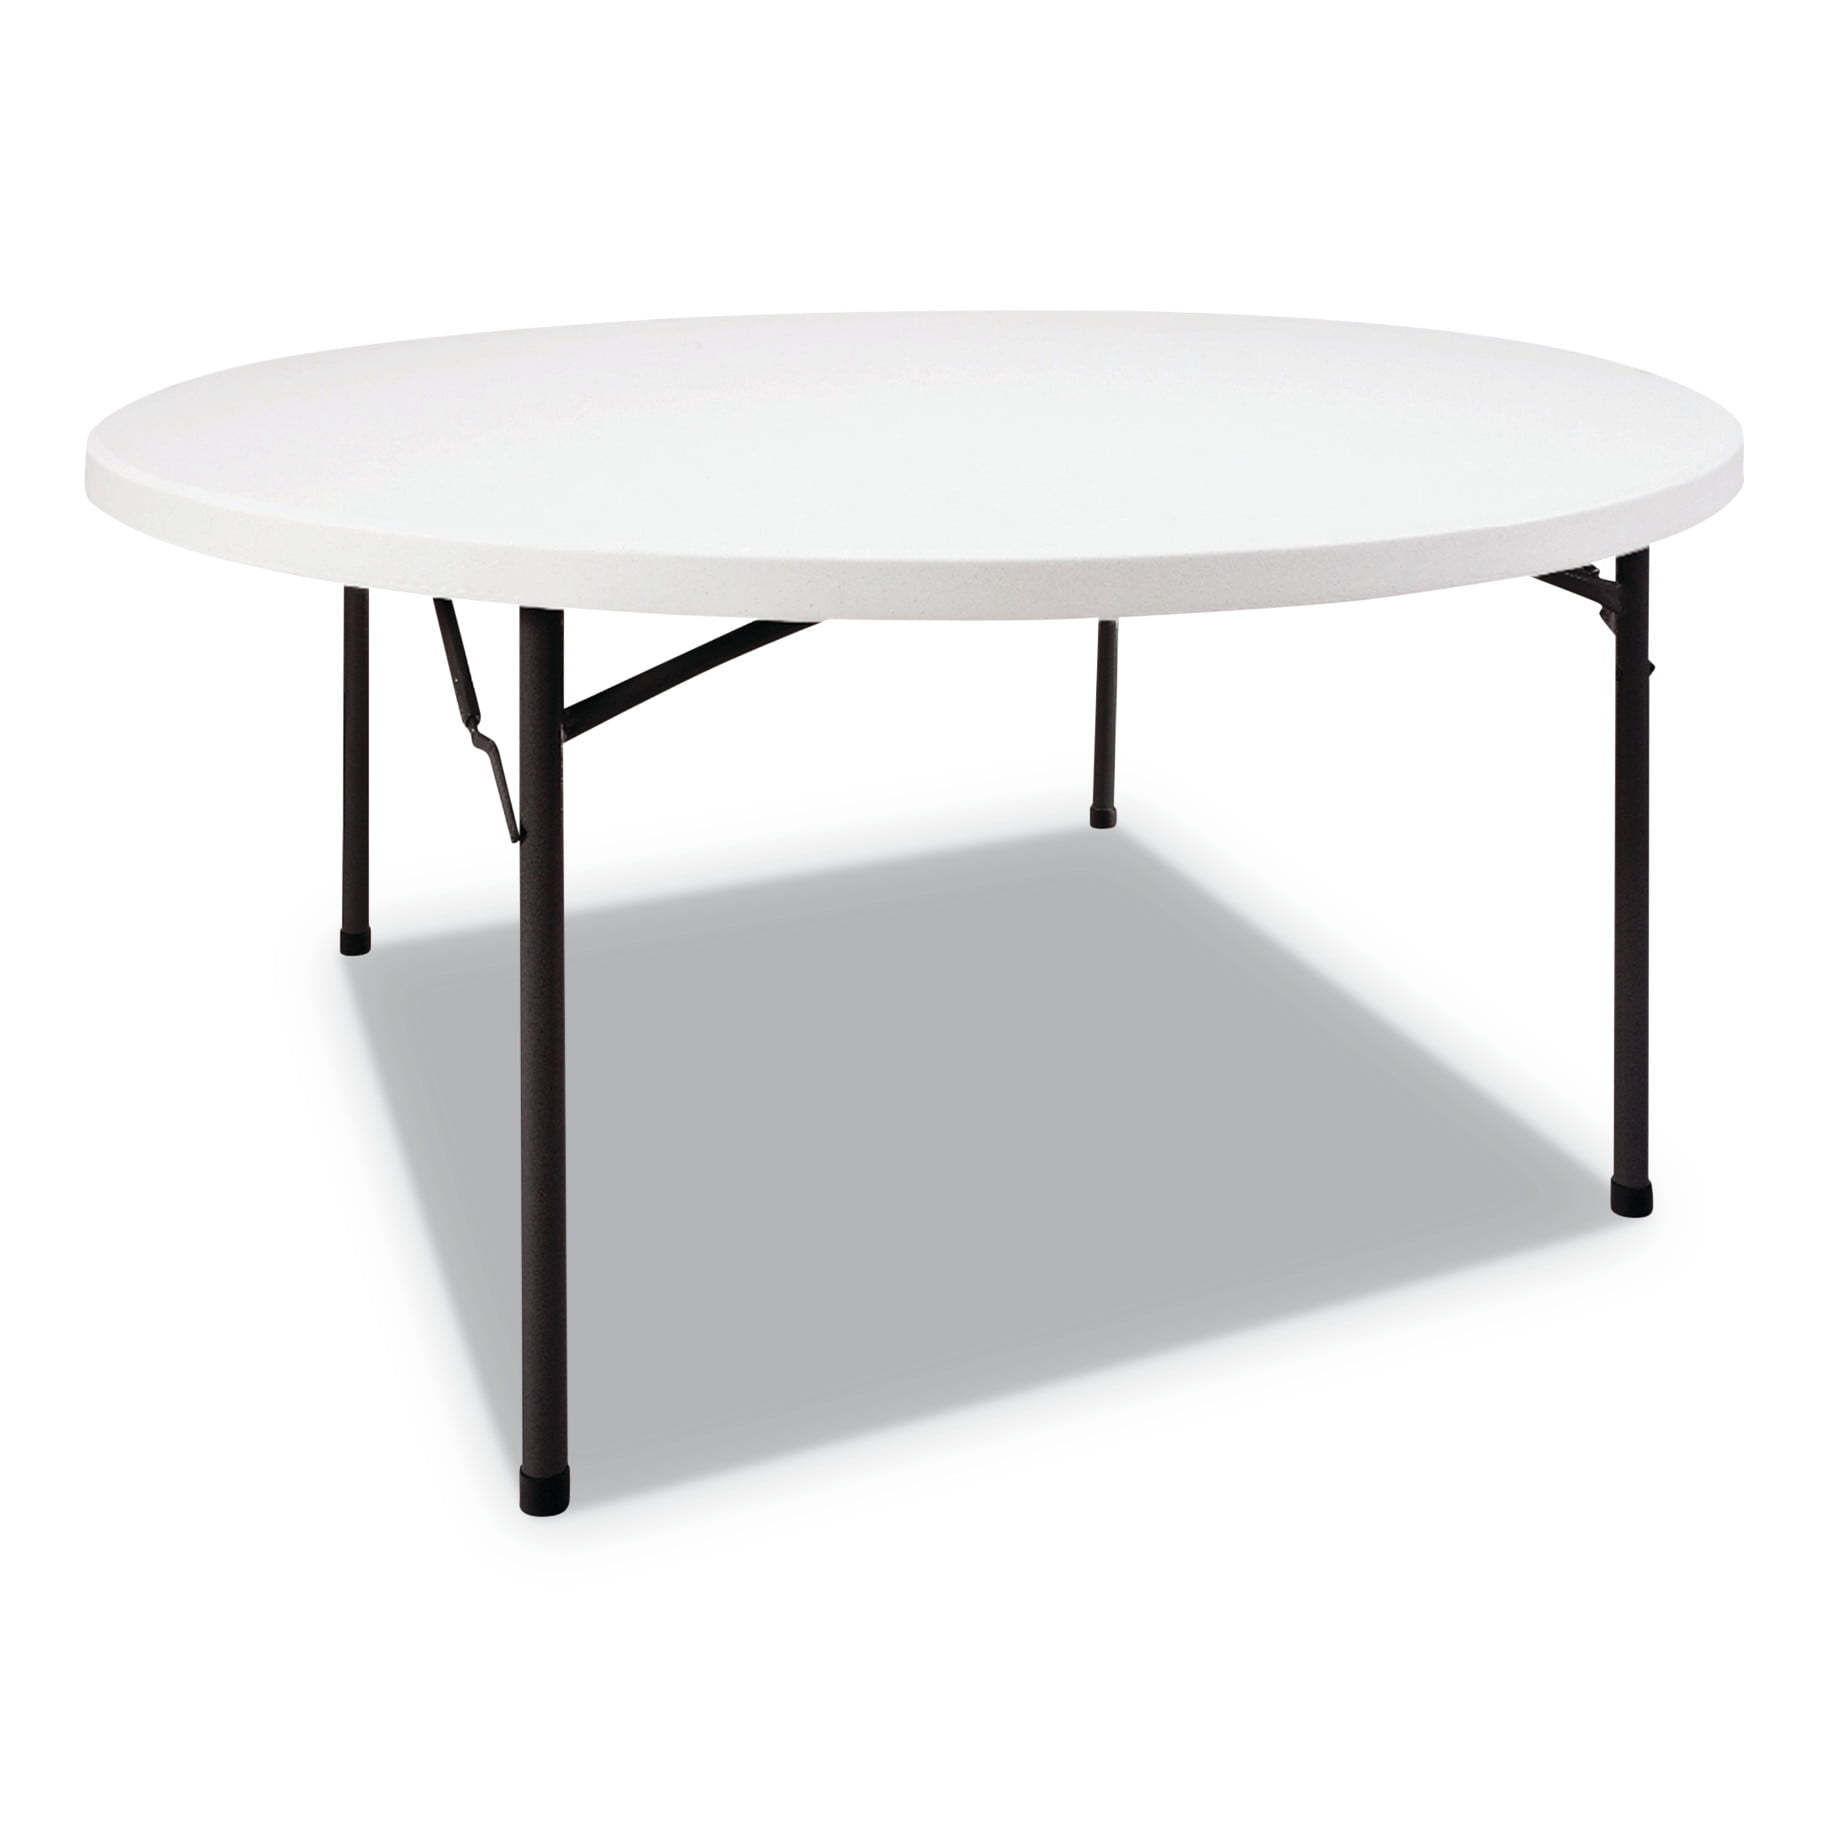 Alera Round Plastic Folding Table 60, 60 Round Plastic Folding Tables